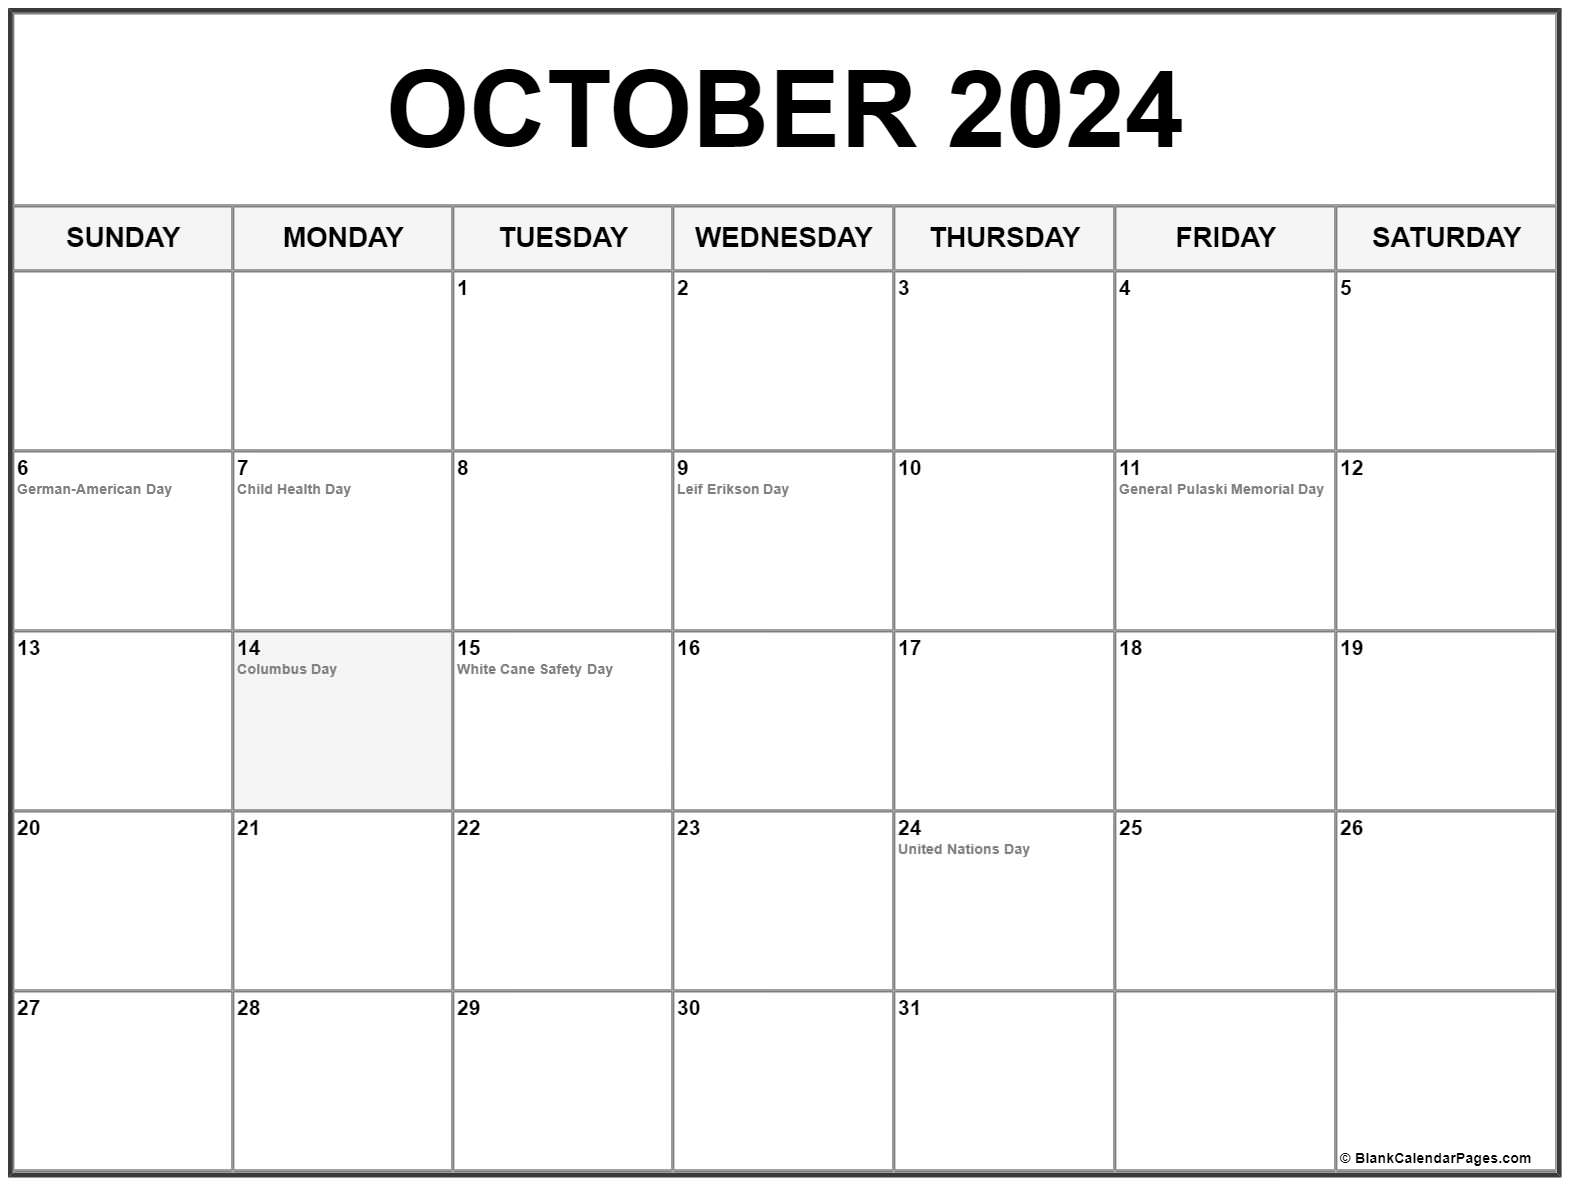 October Calendar 2022 October 2022 With Holidays Calendar